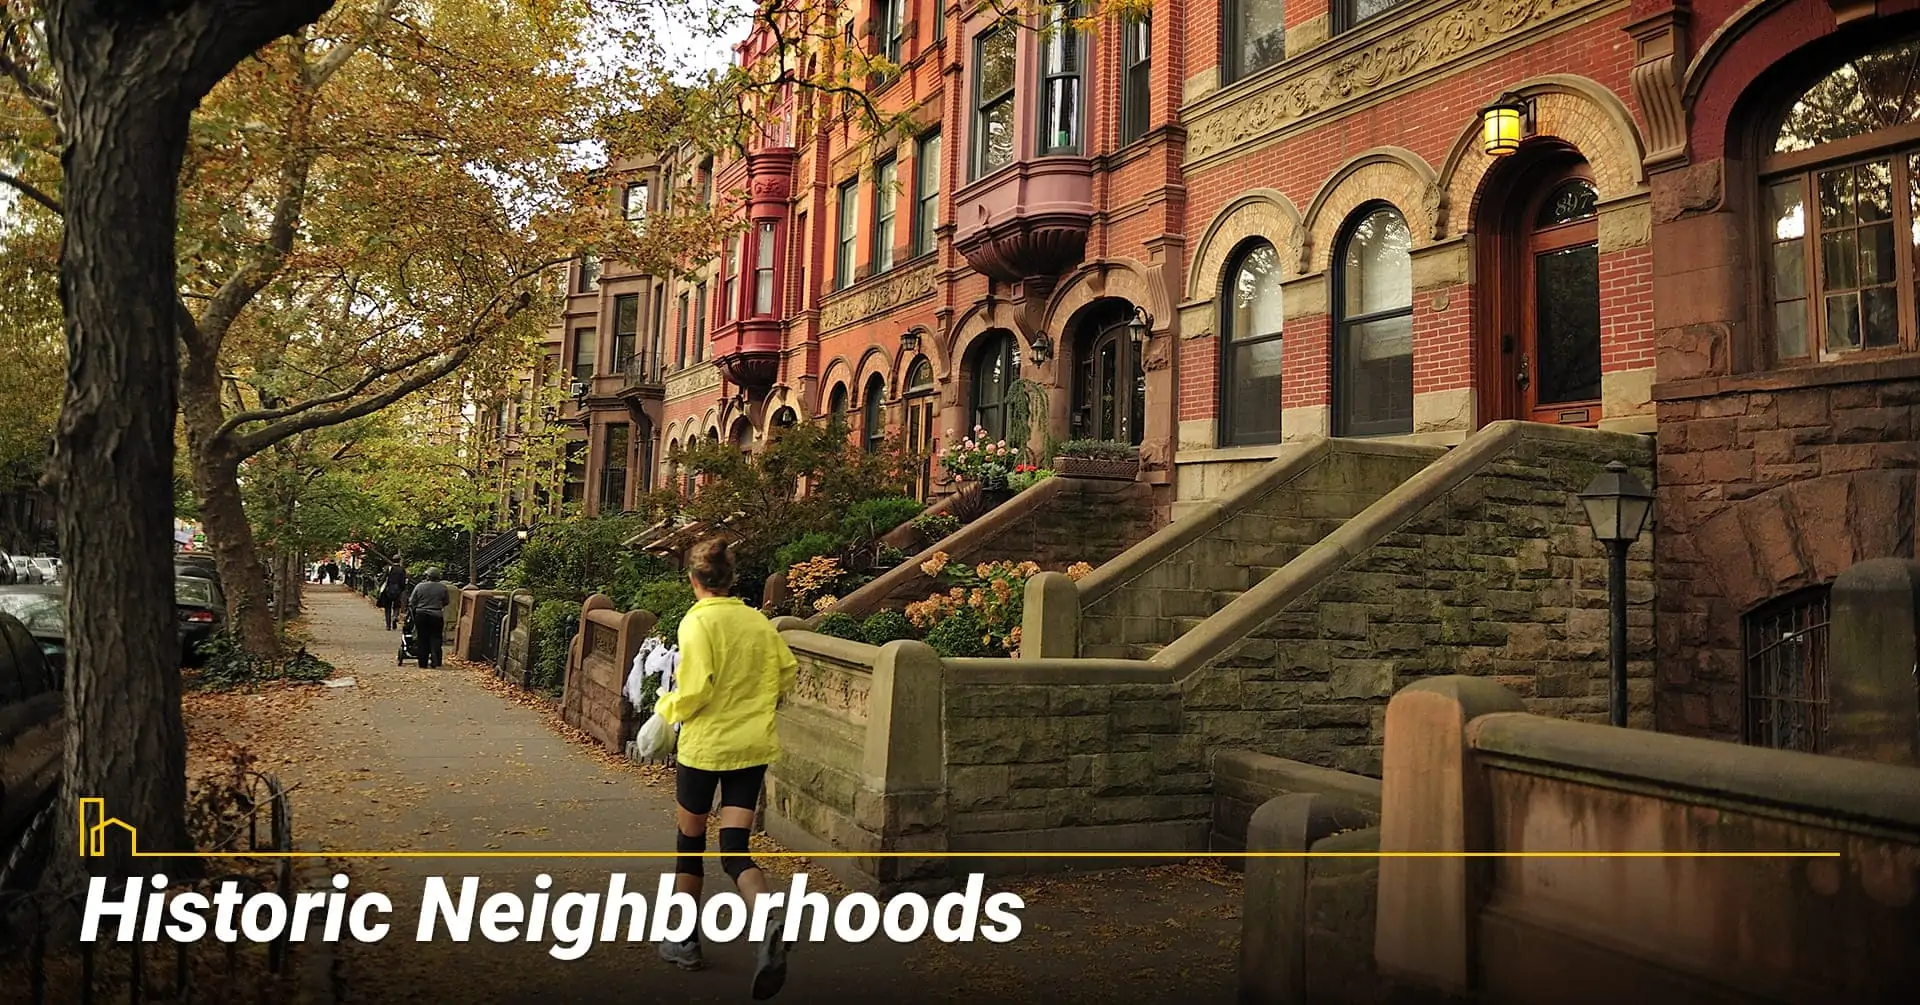 Historic Neighborhoods, living a historic neighborhood